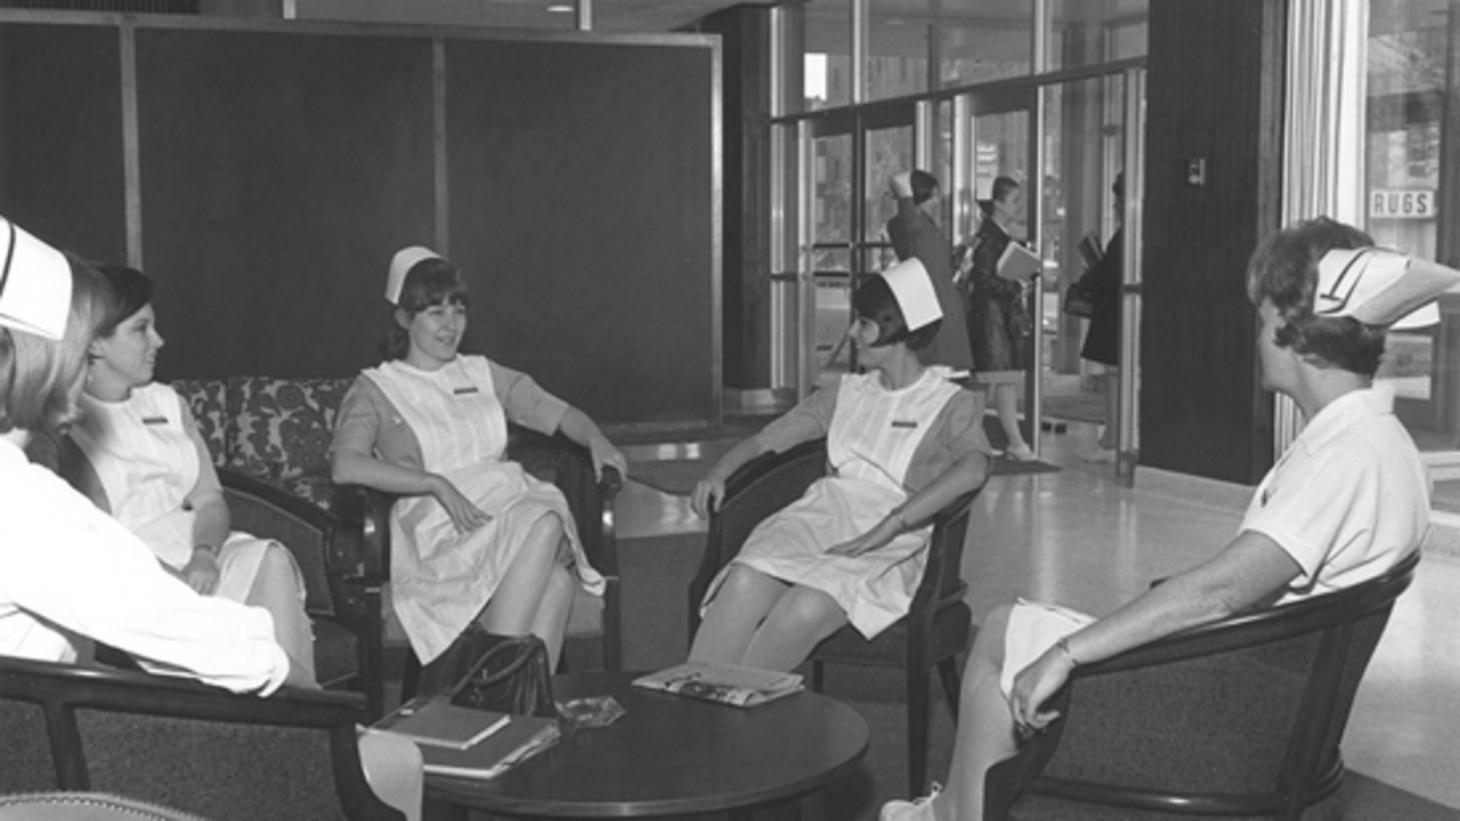 1970 – Nursing students taking a break together between classes